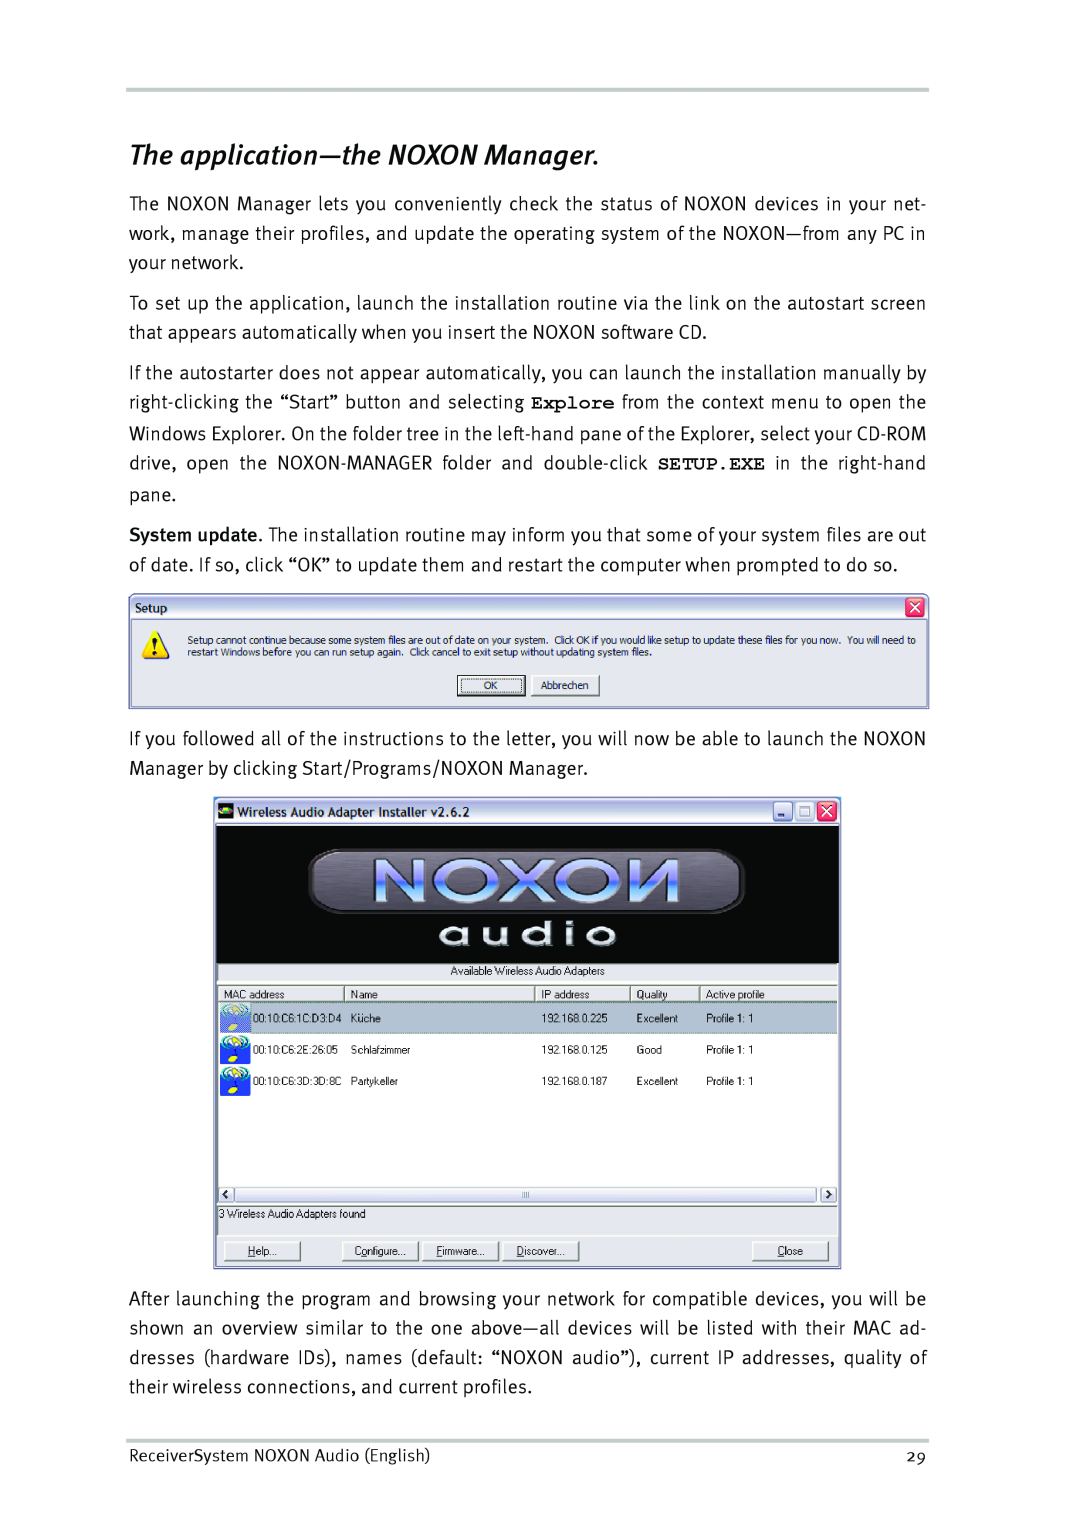 TerraTec manual The application-theNOXON Manager, ReceiverSystem NOXON Audio English 